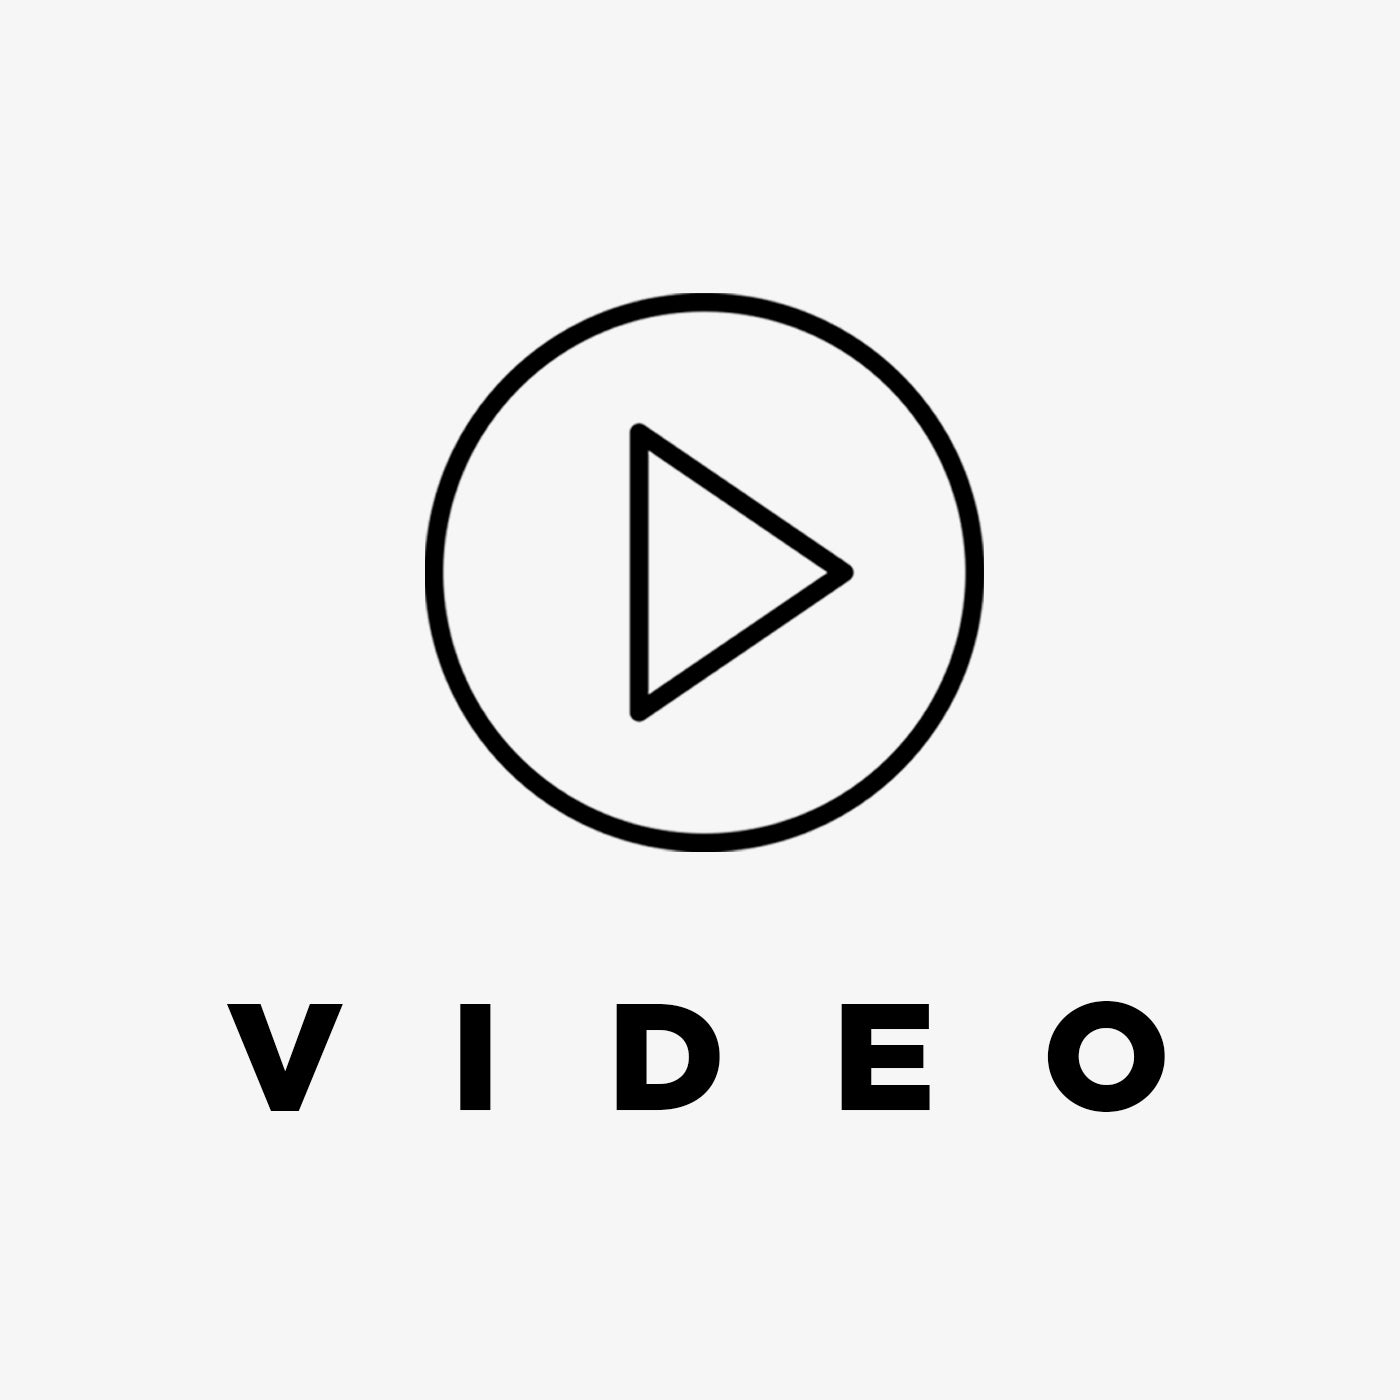 video:https://cdn.shopify.com/s/files/1/0047/9995/5030/files/KIK21603_0058_VIDEO.mp4?v=1600443899